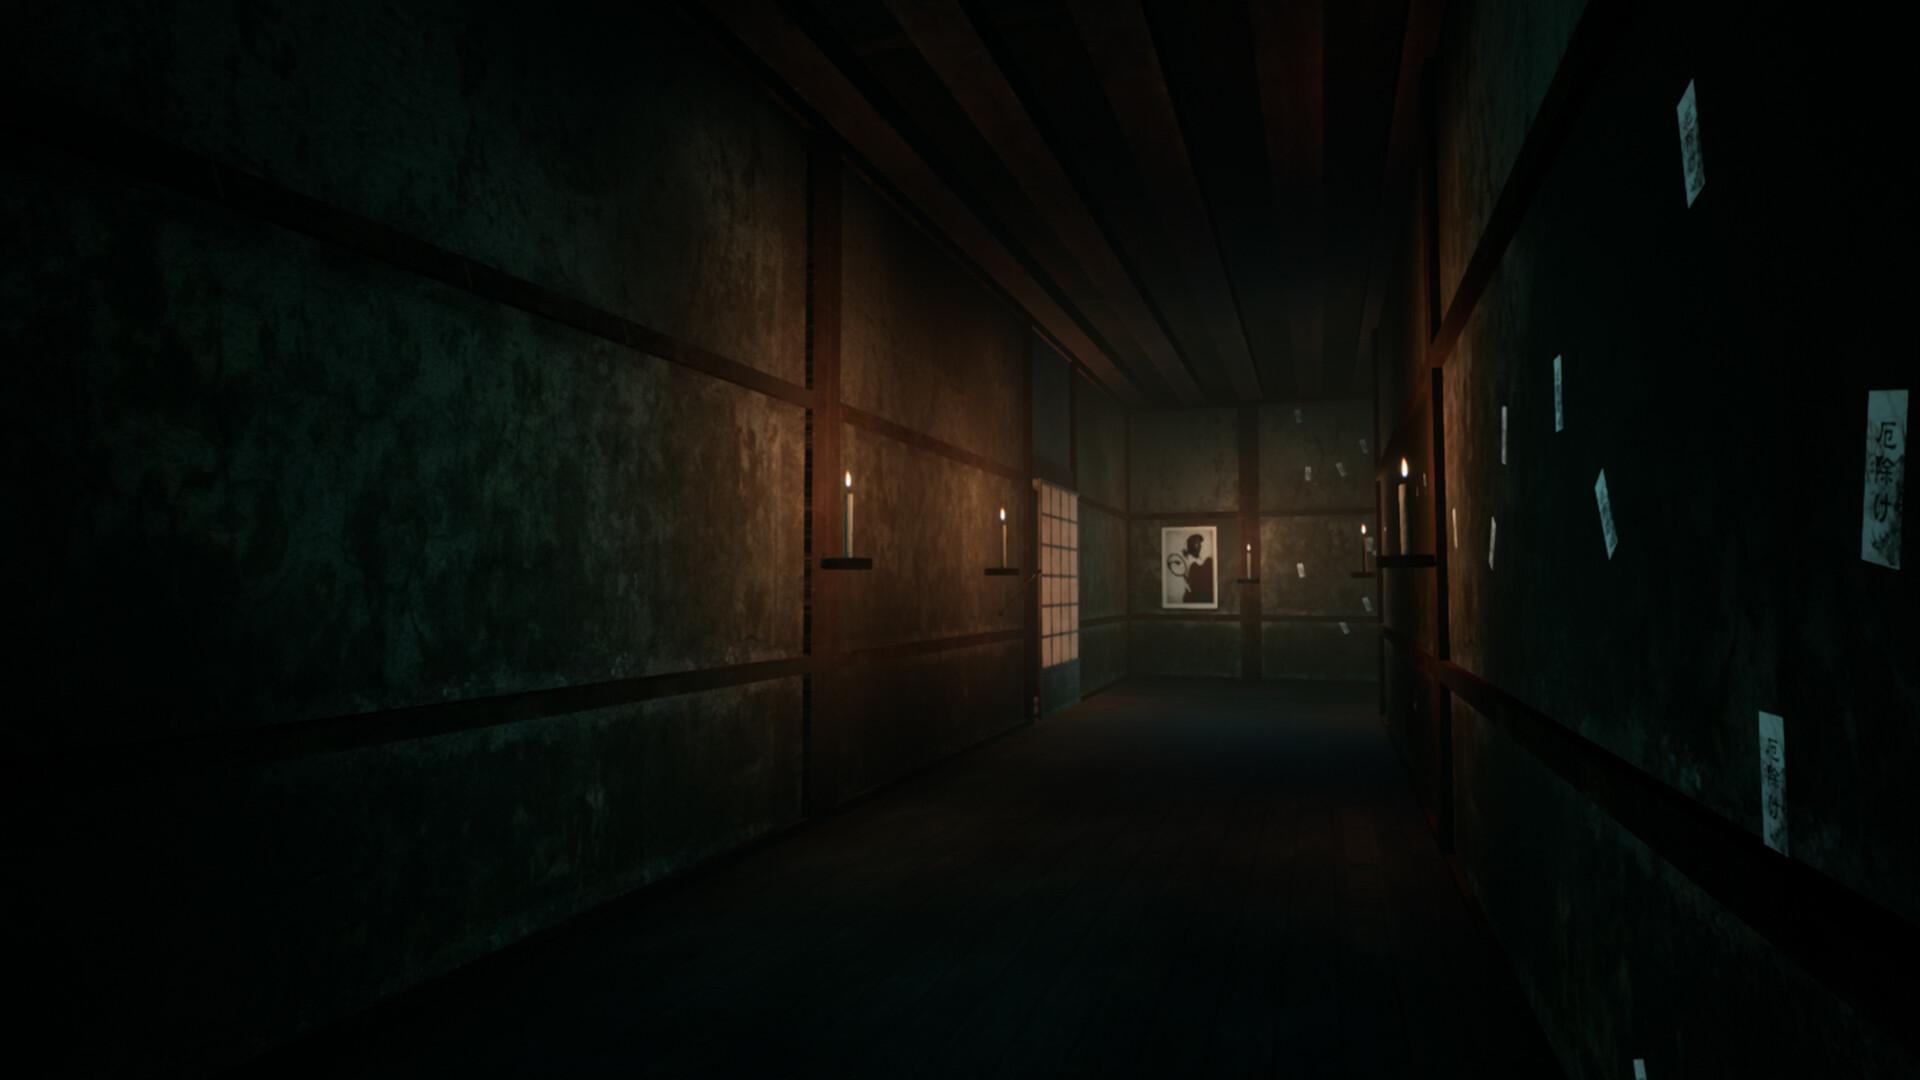 Screenshot №22 from game Malice